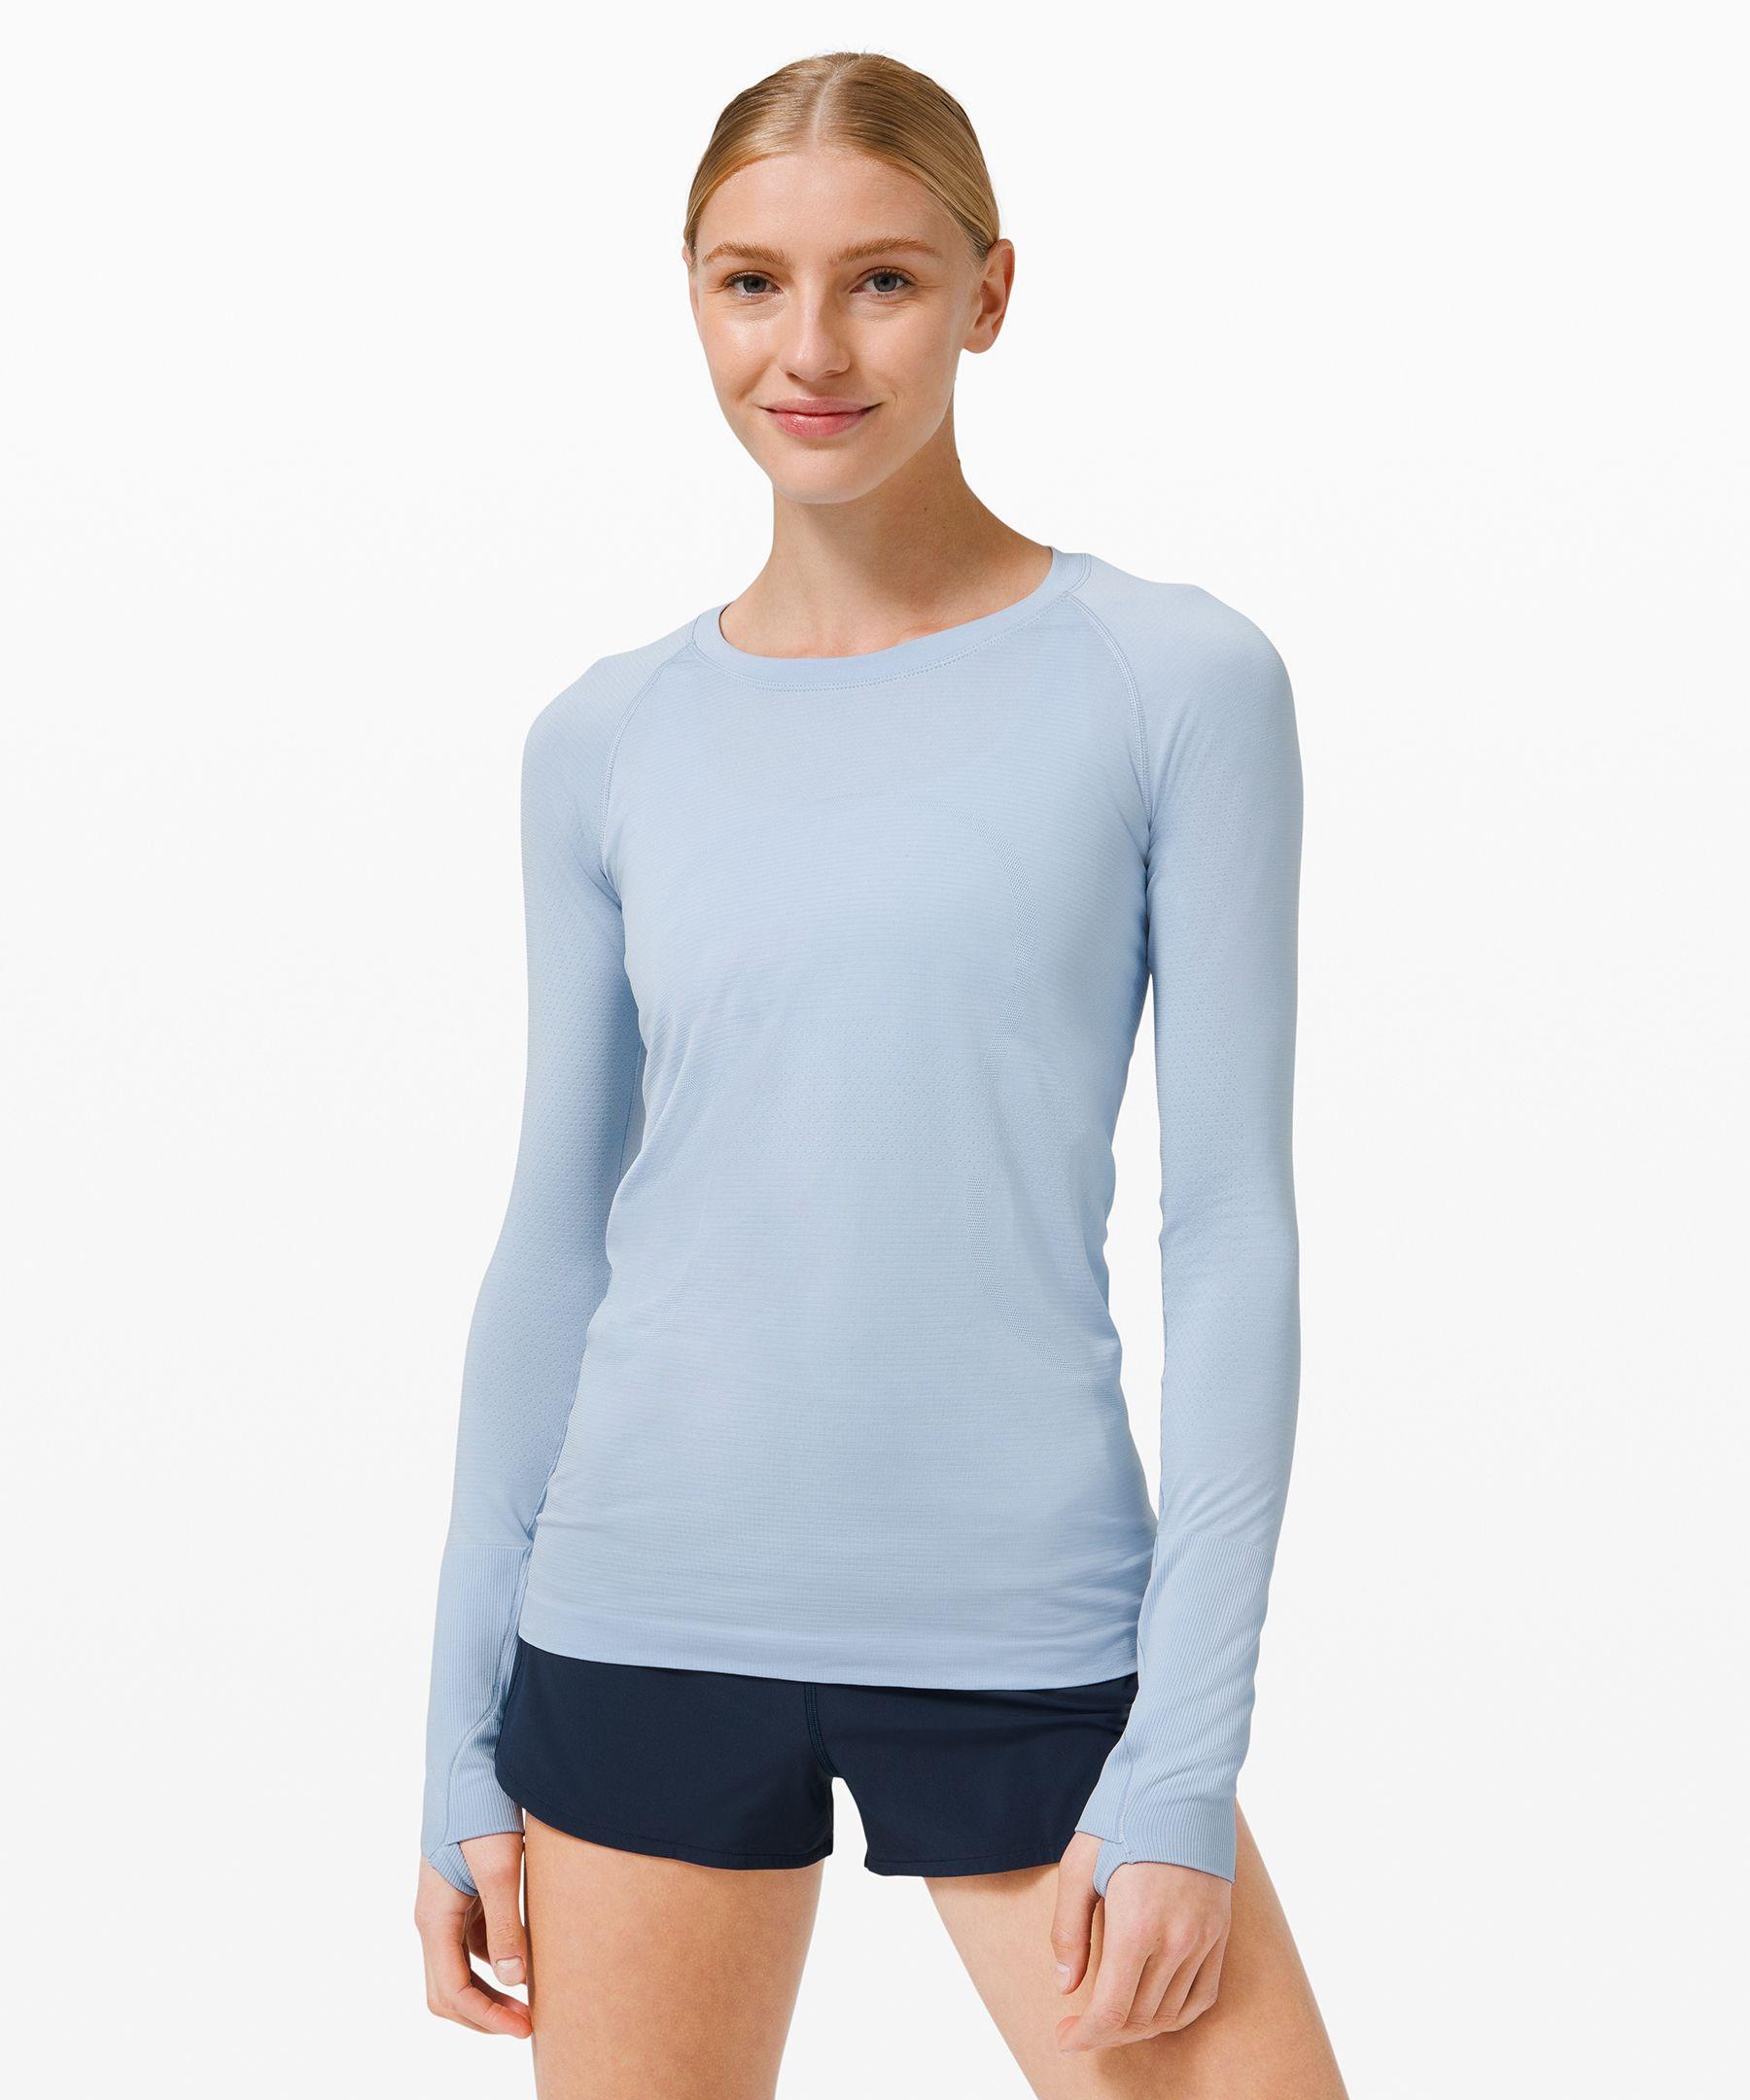 lululemon athletica Swiftly Tech Long Sleeve Shirt 2.0 in Blue